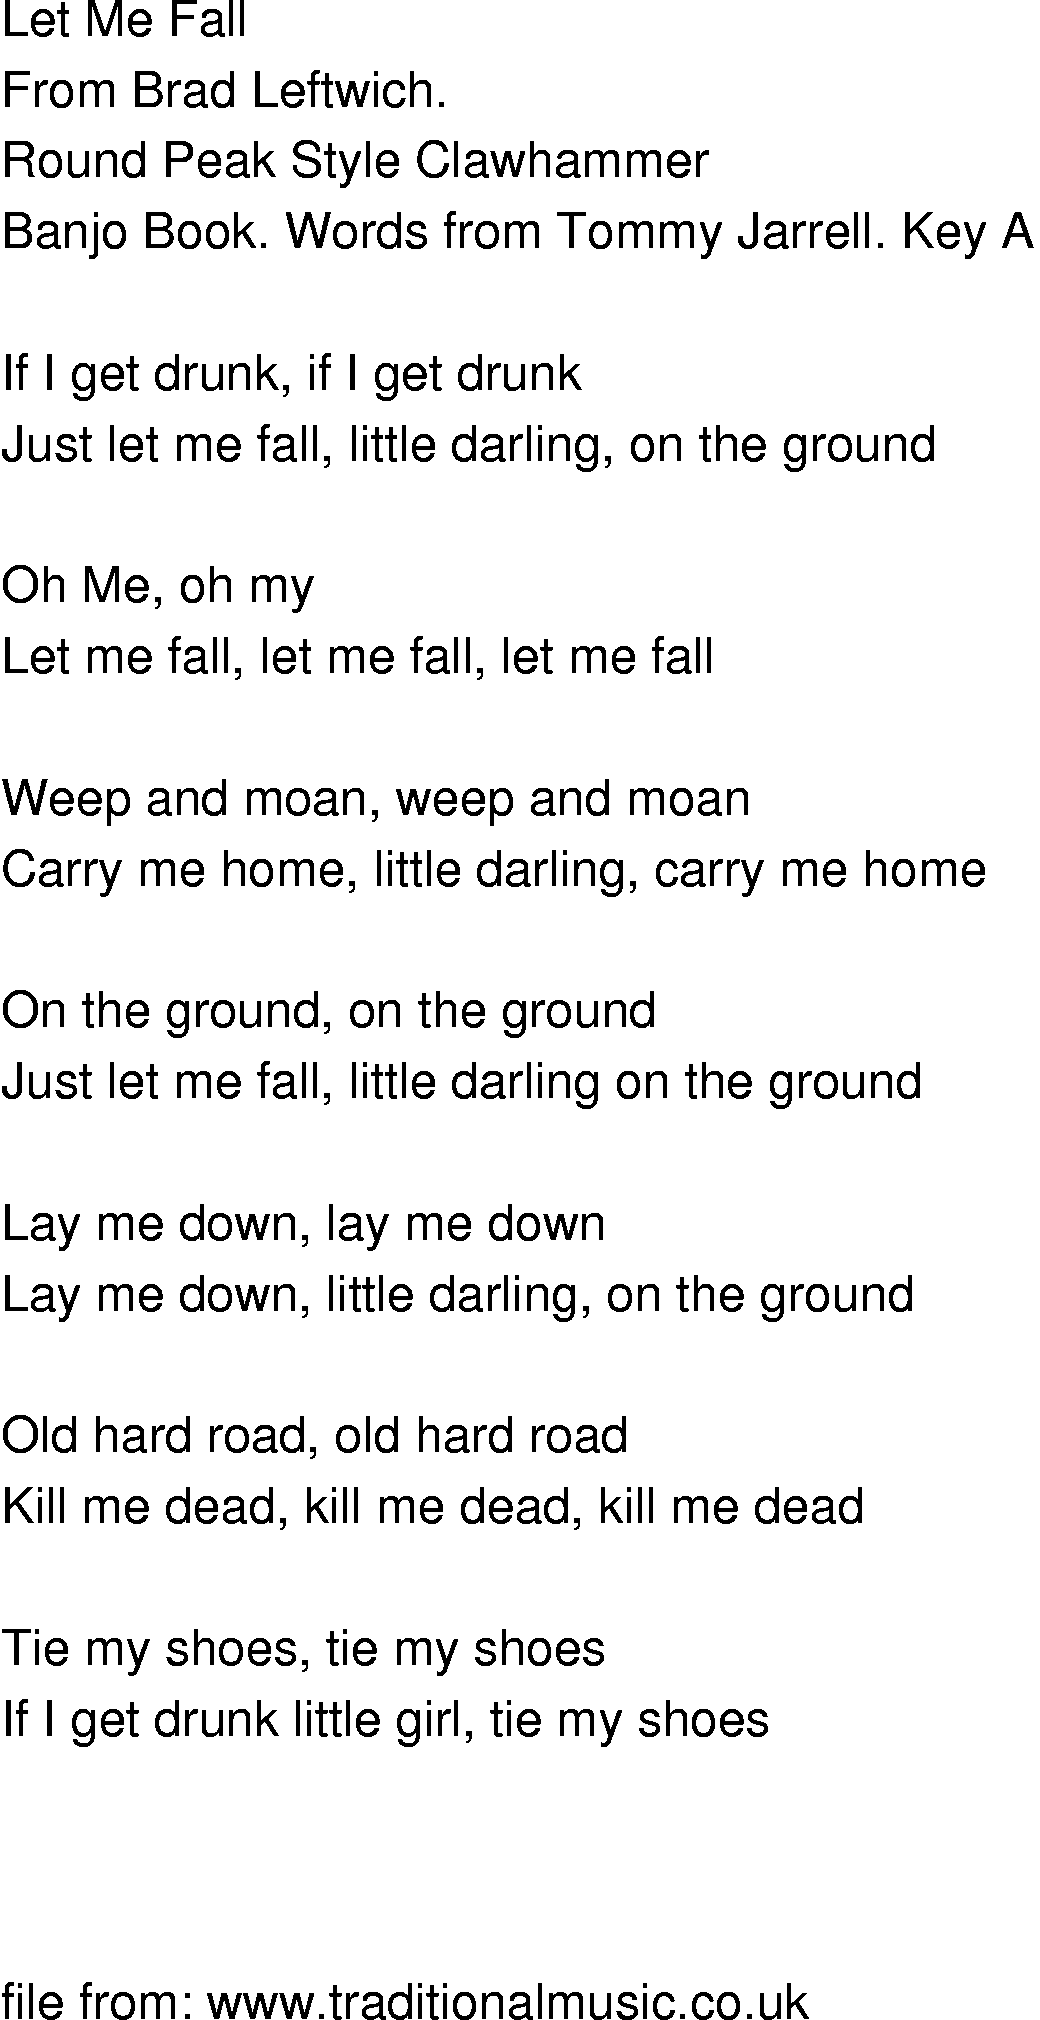 Old-Time (oldtimey) Song Lyrics - let me fall